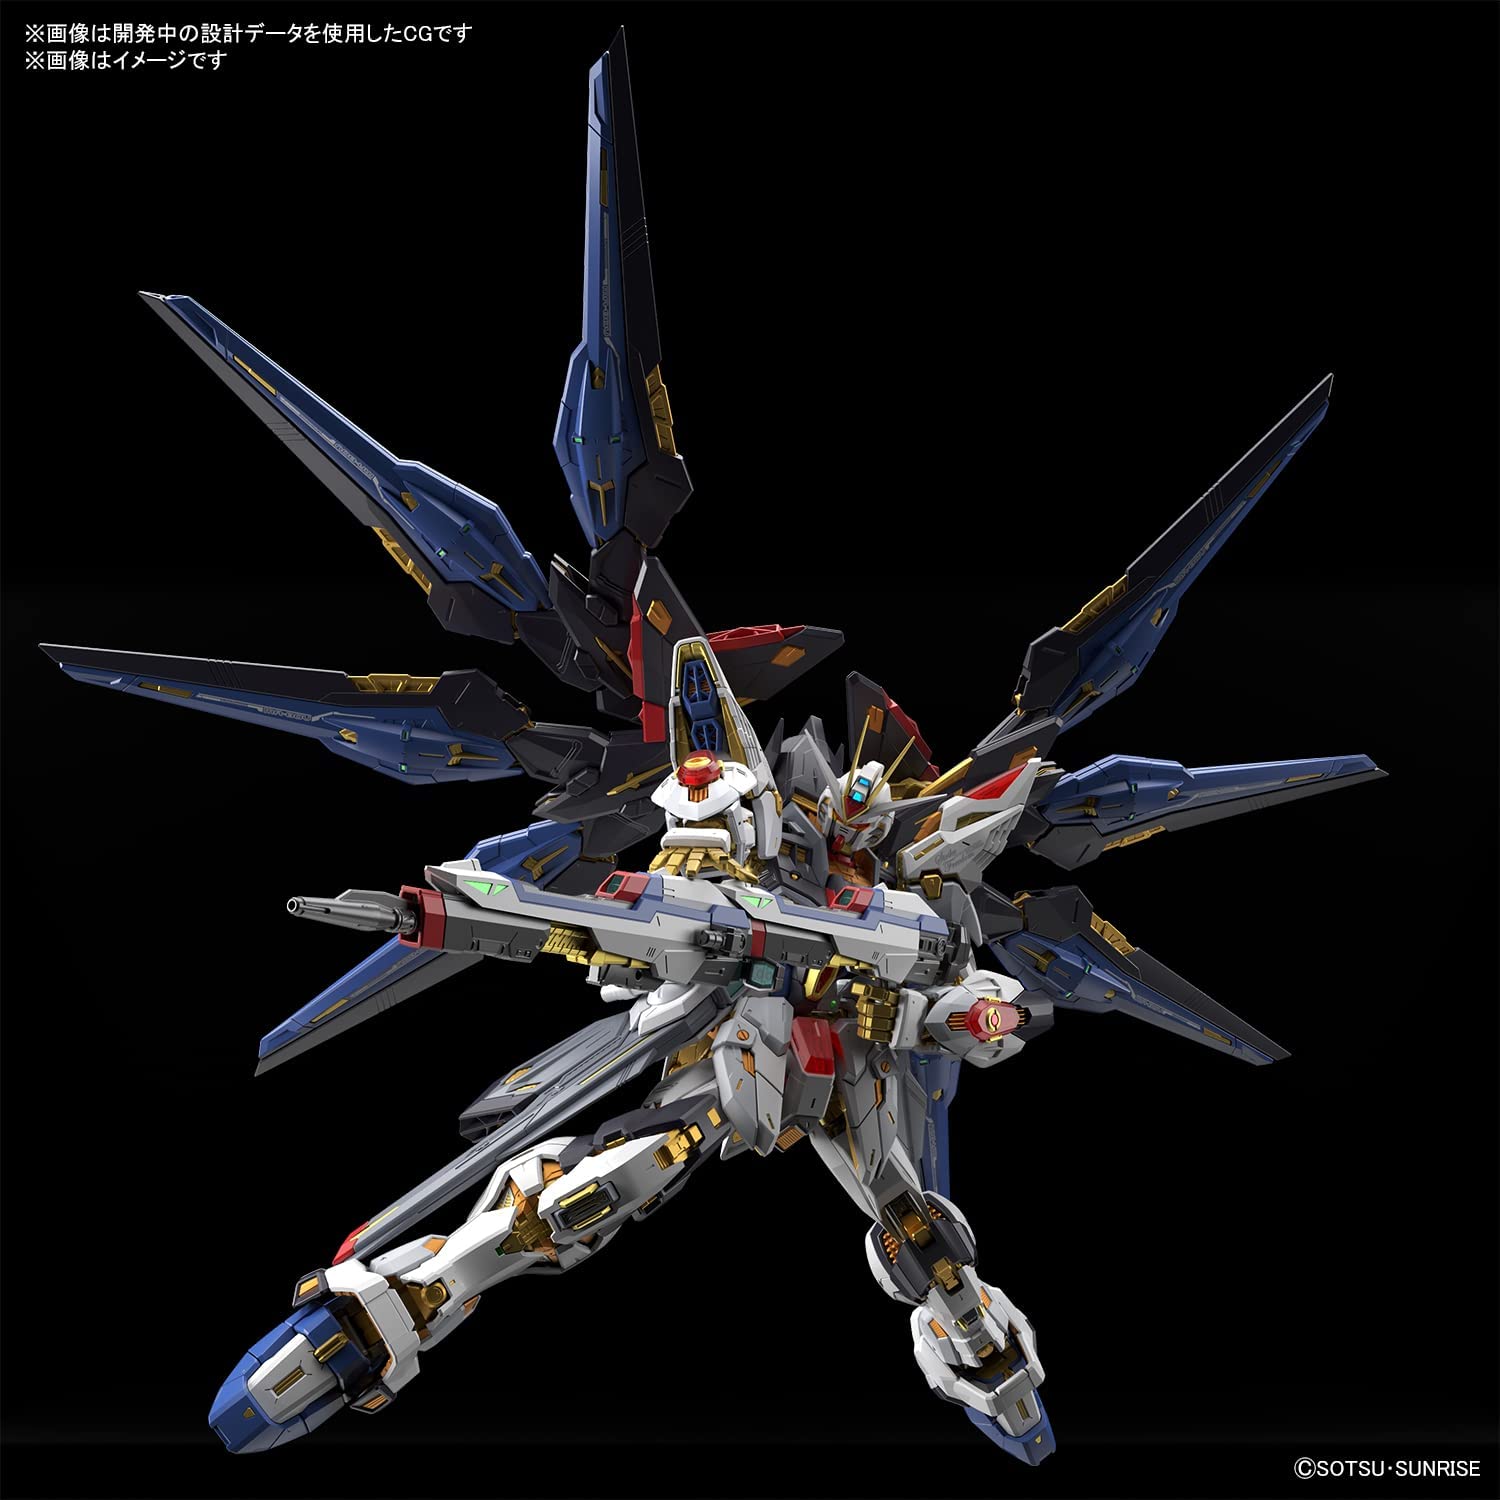 MGEX Strike Freedom Gundam